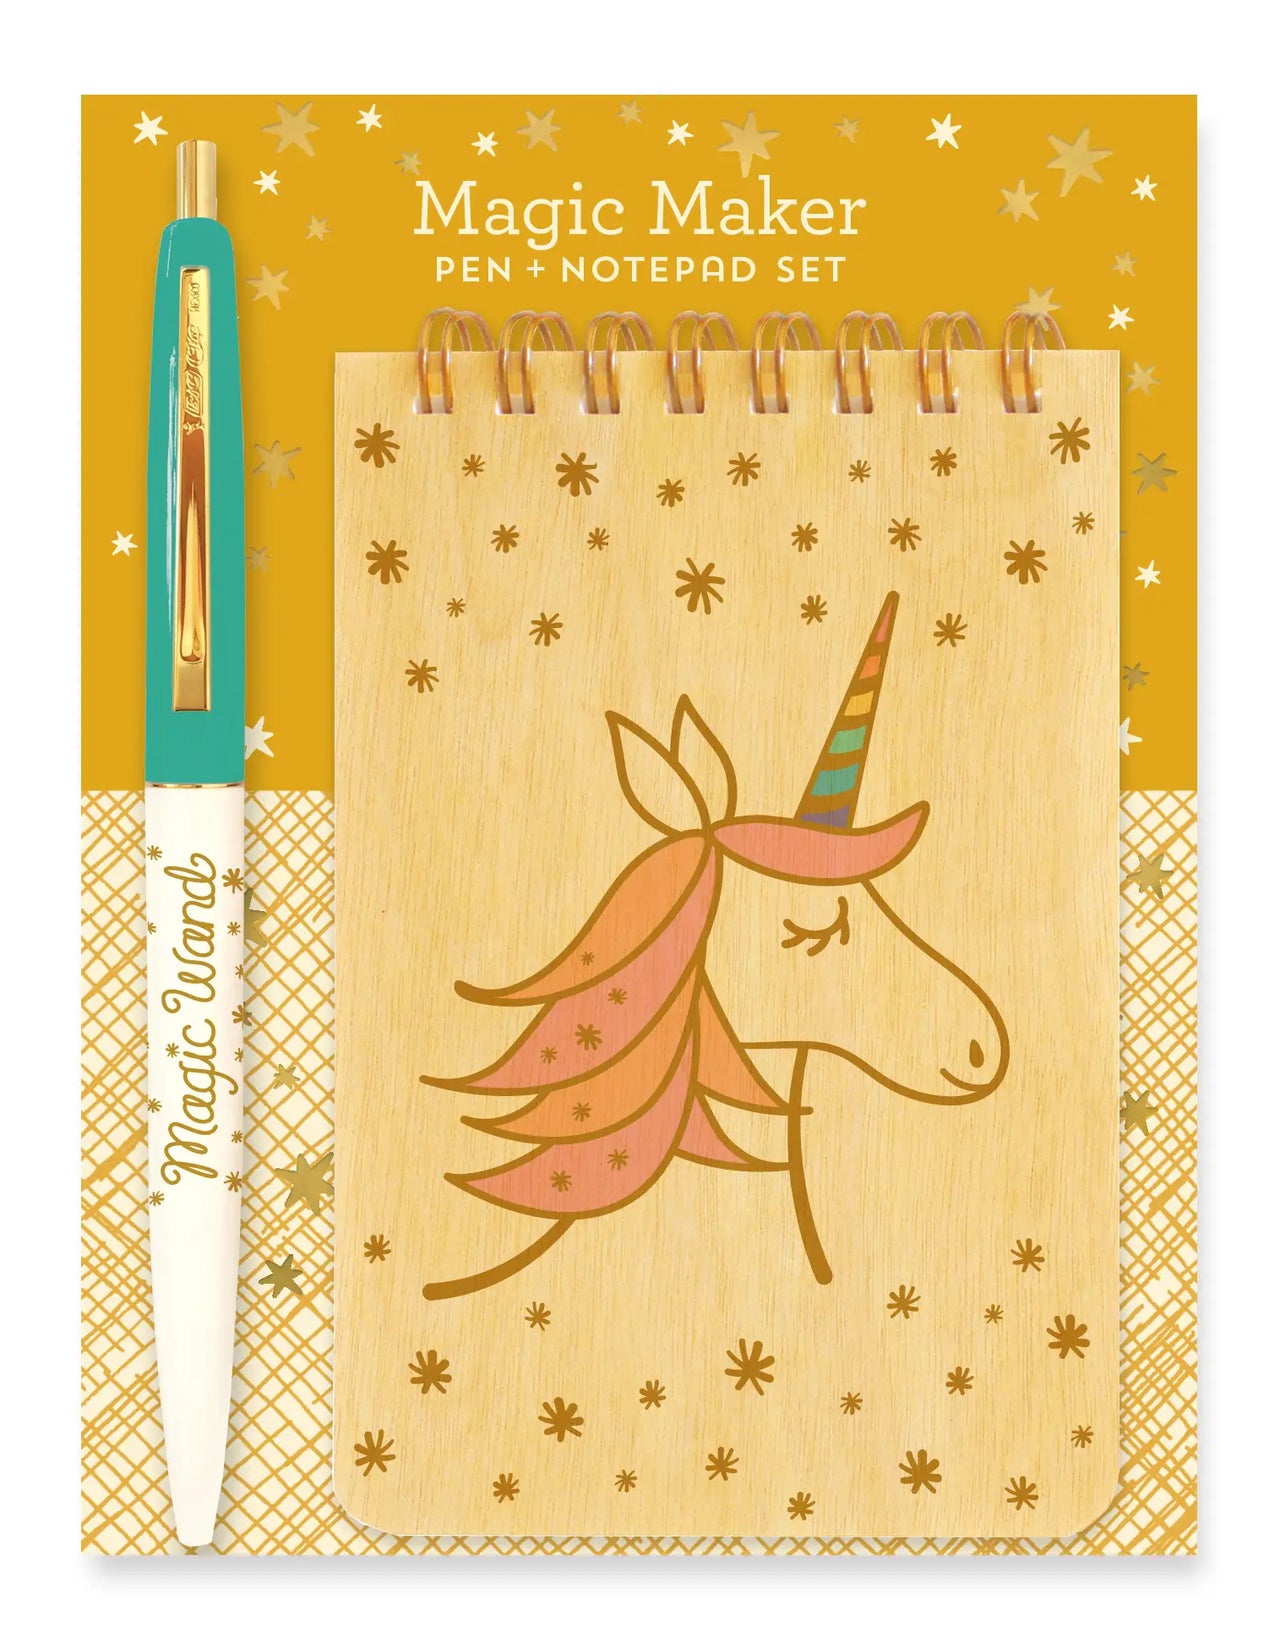 Magic Maker Gift Set